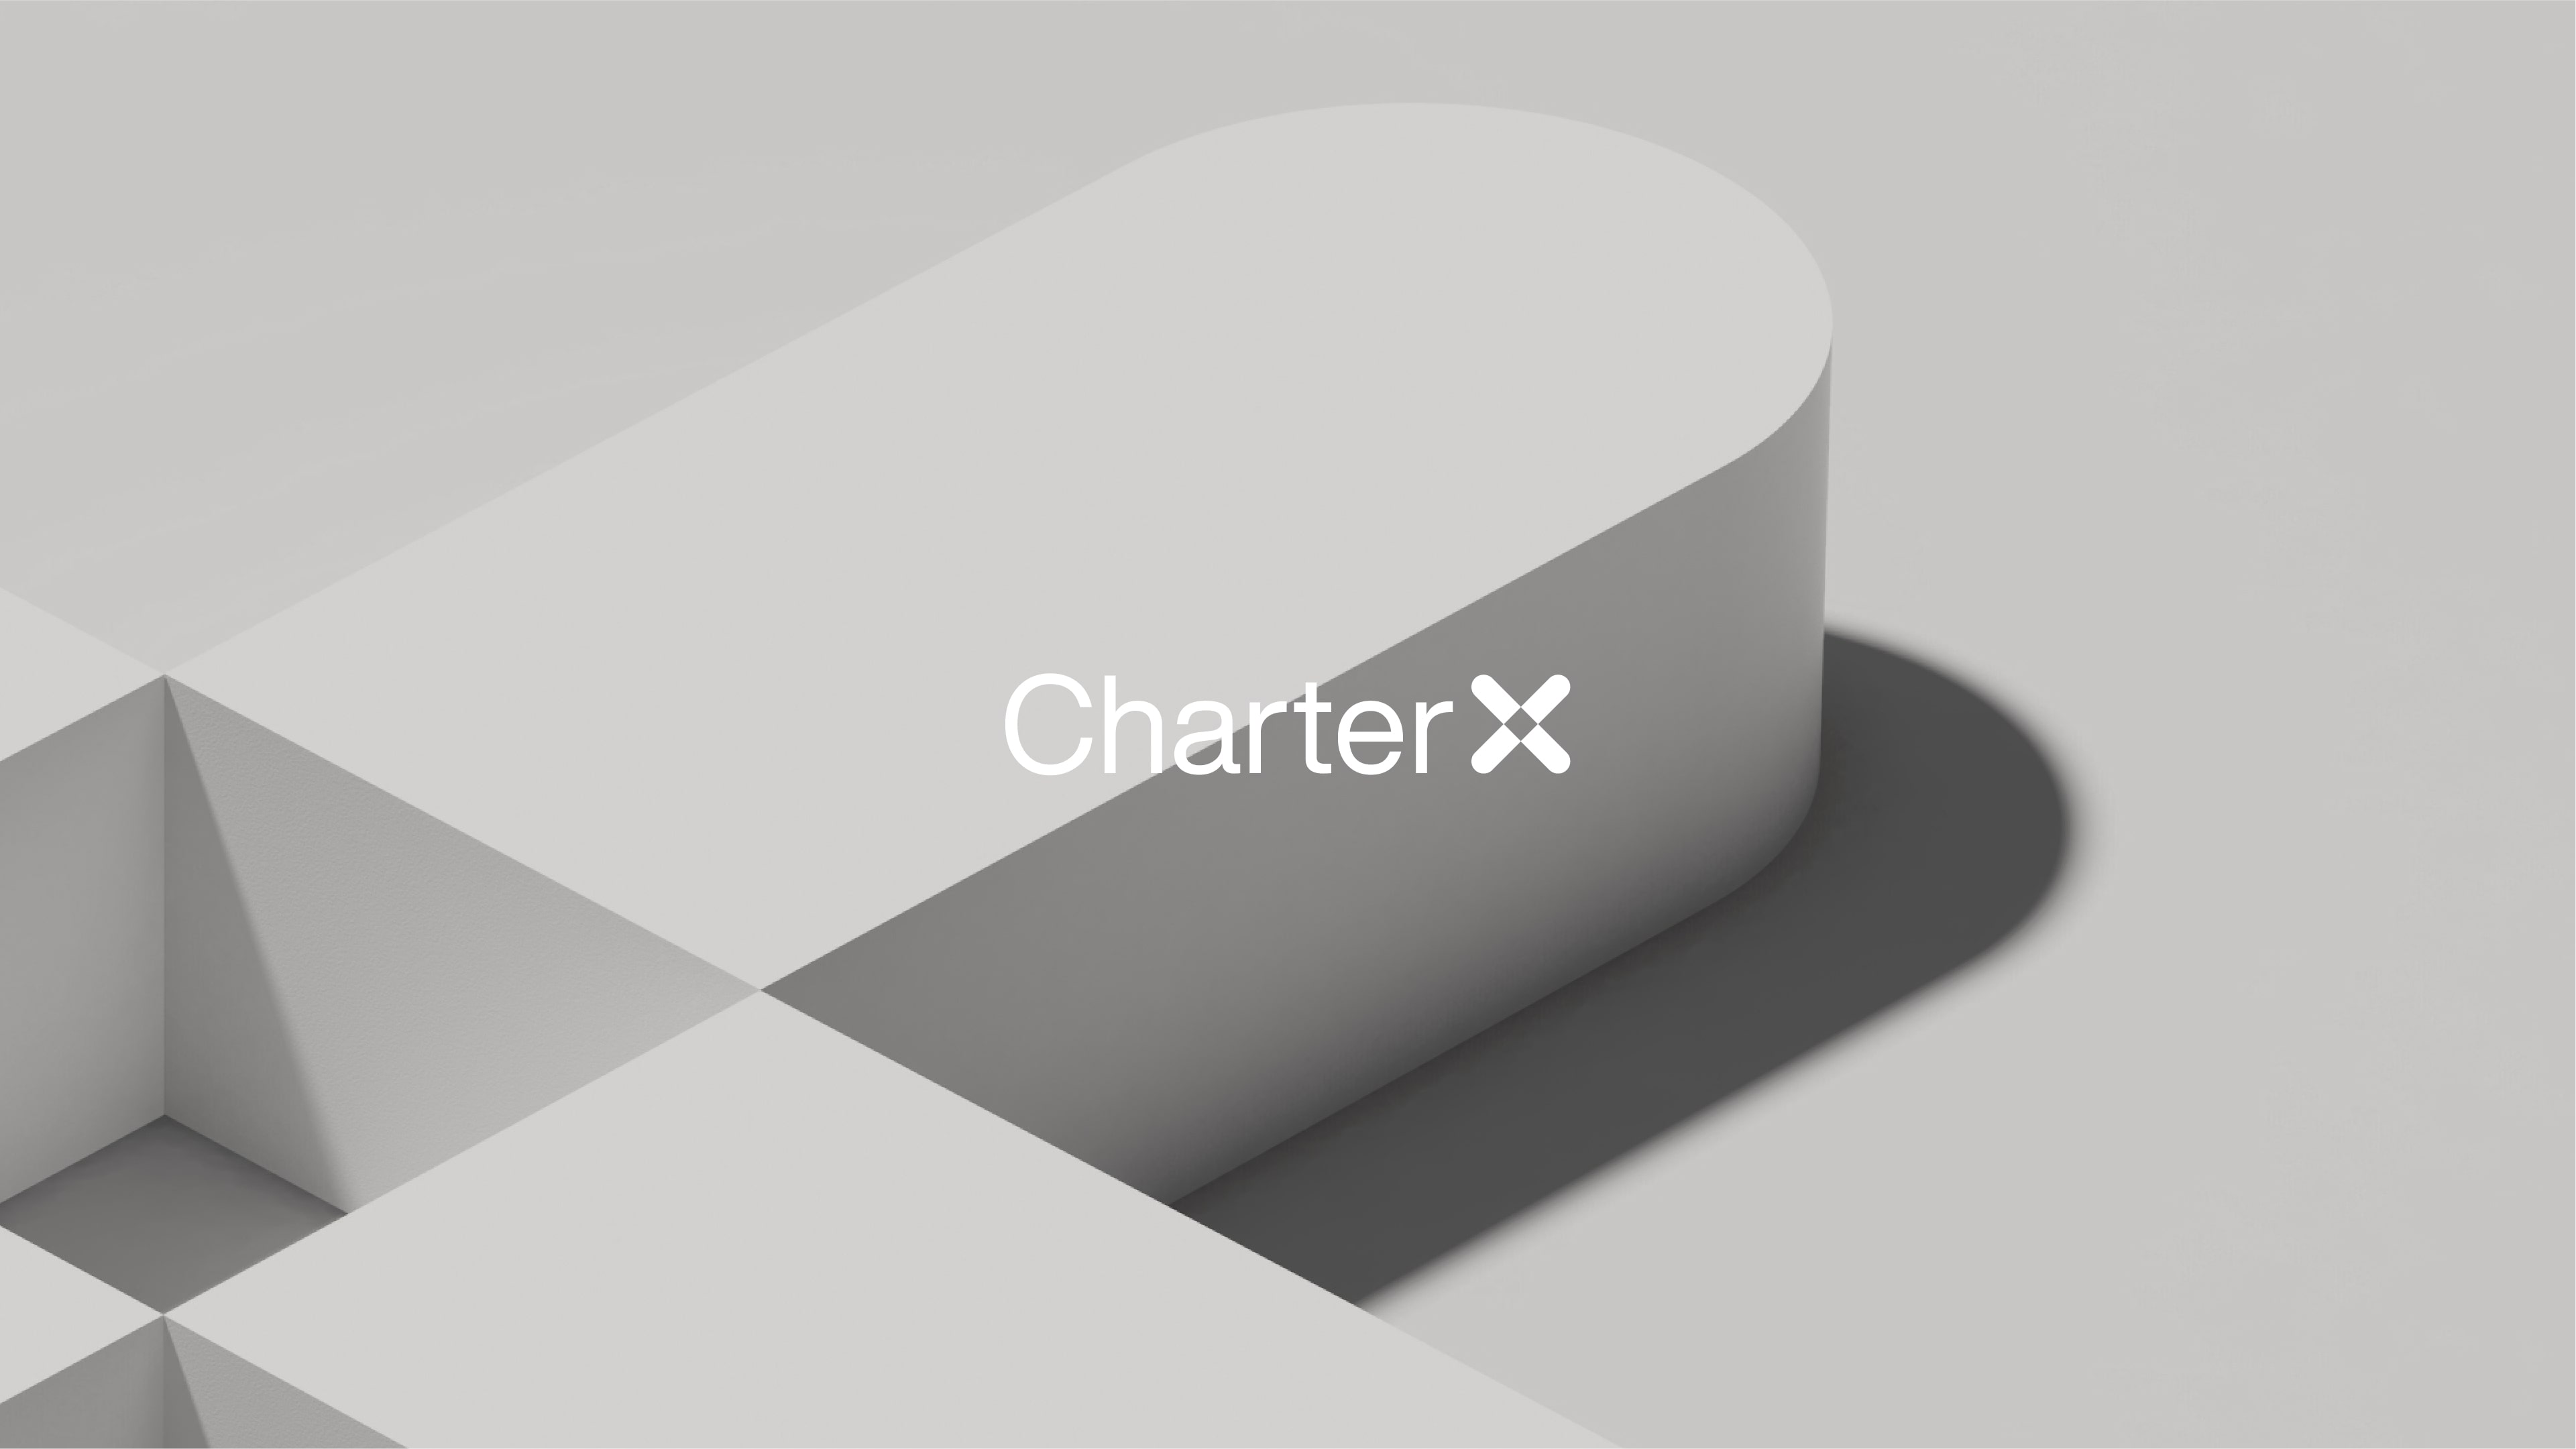 Charter X Branding by Vetro Design